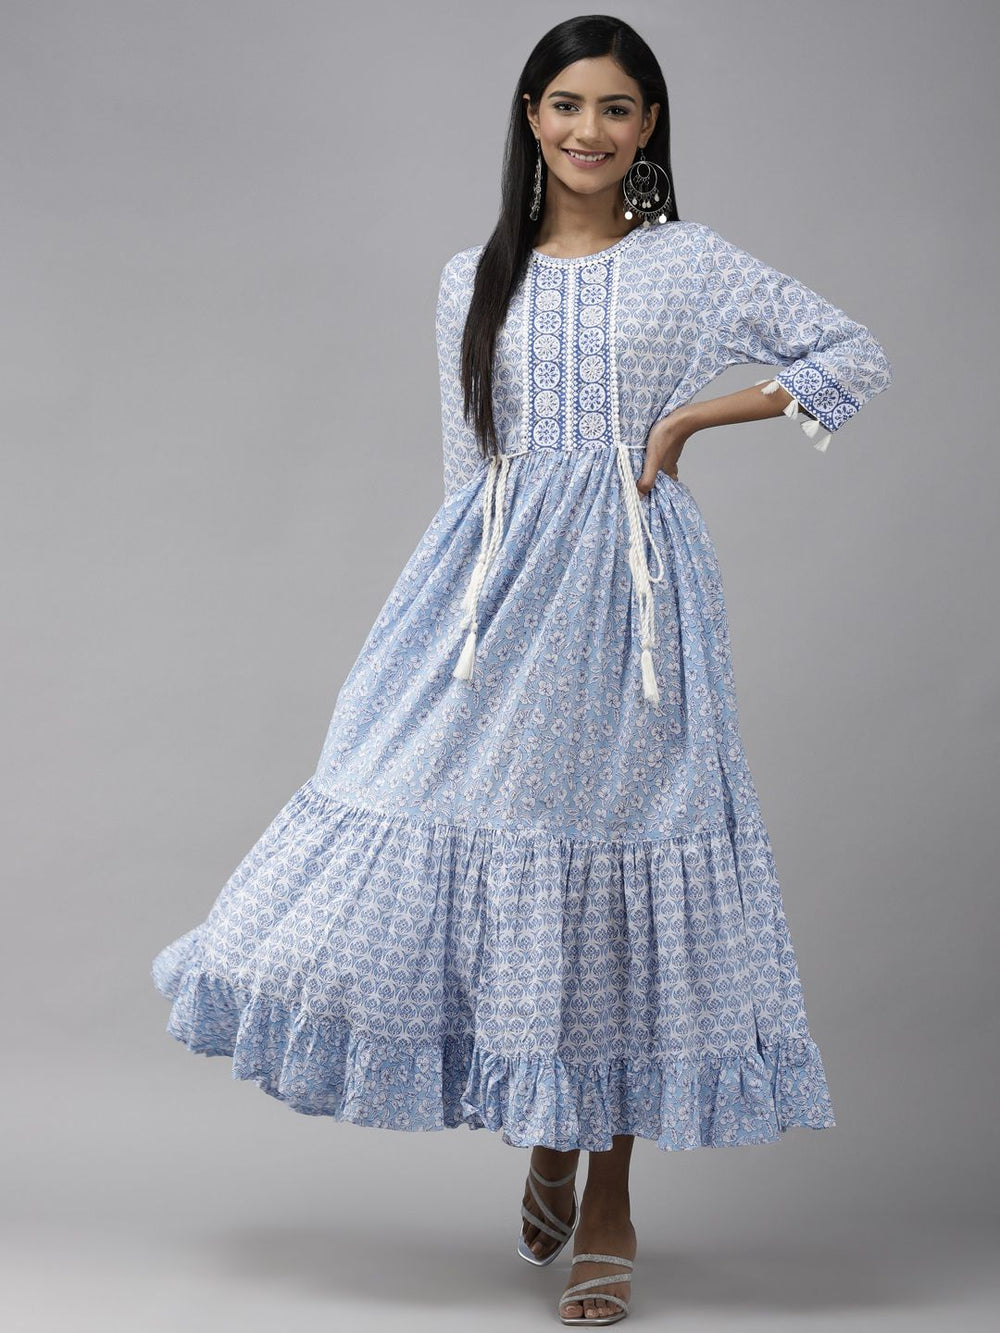 White & Blue Ethnic Dress